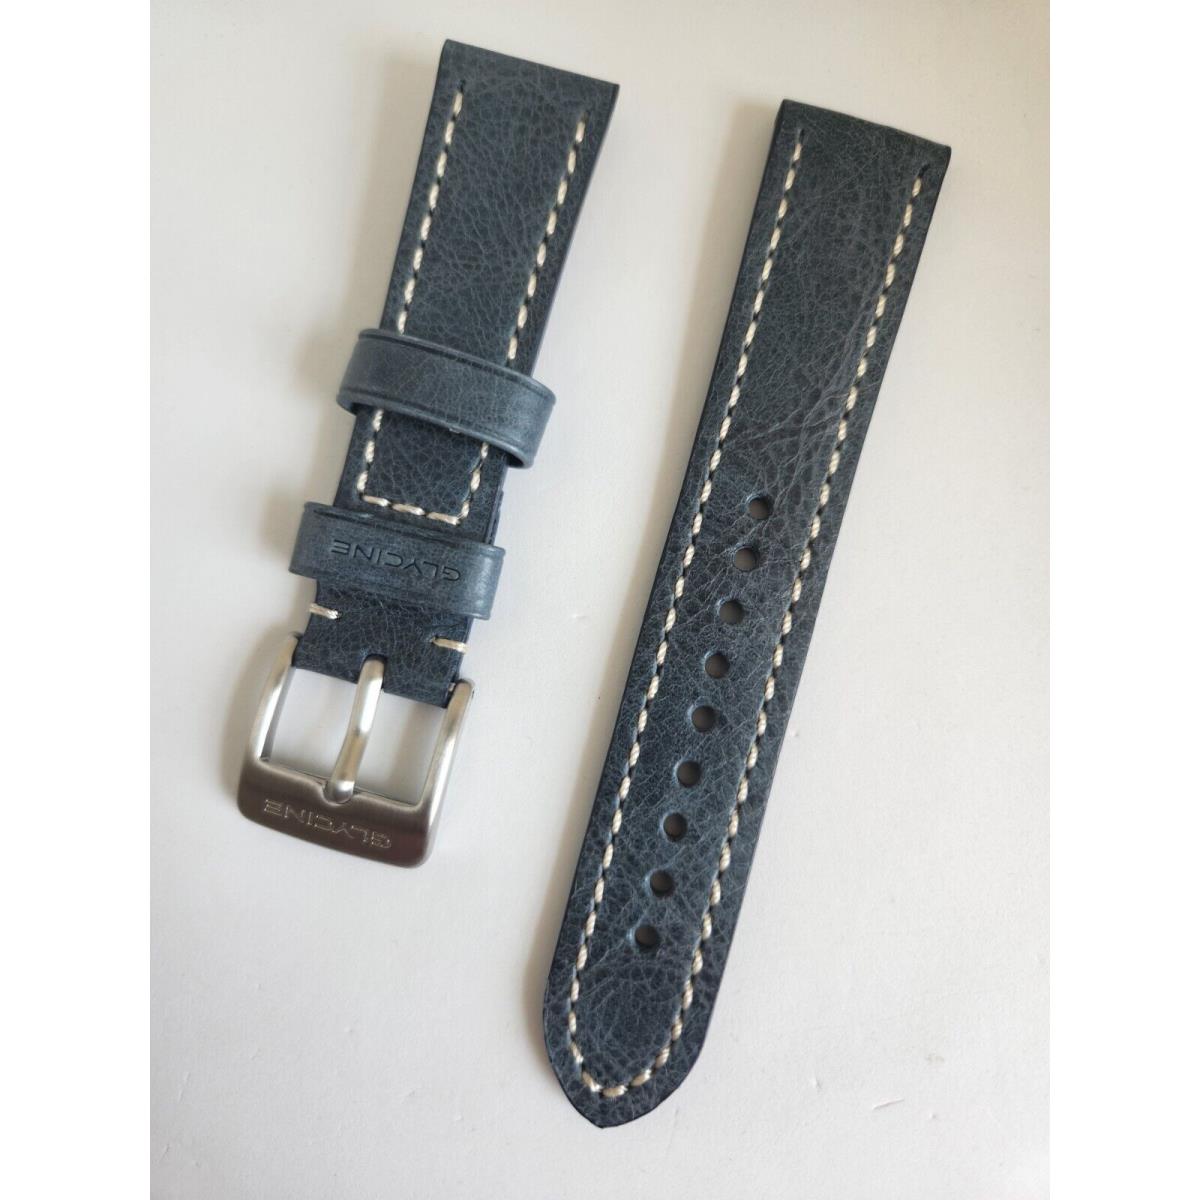 Oem Glycine Airman 22mm Blue Leather Strap Band Bracelet with Steel Buckle